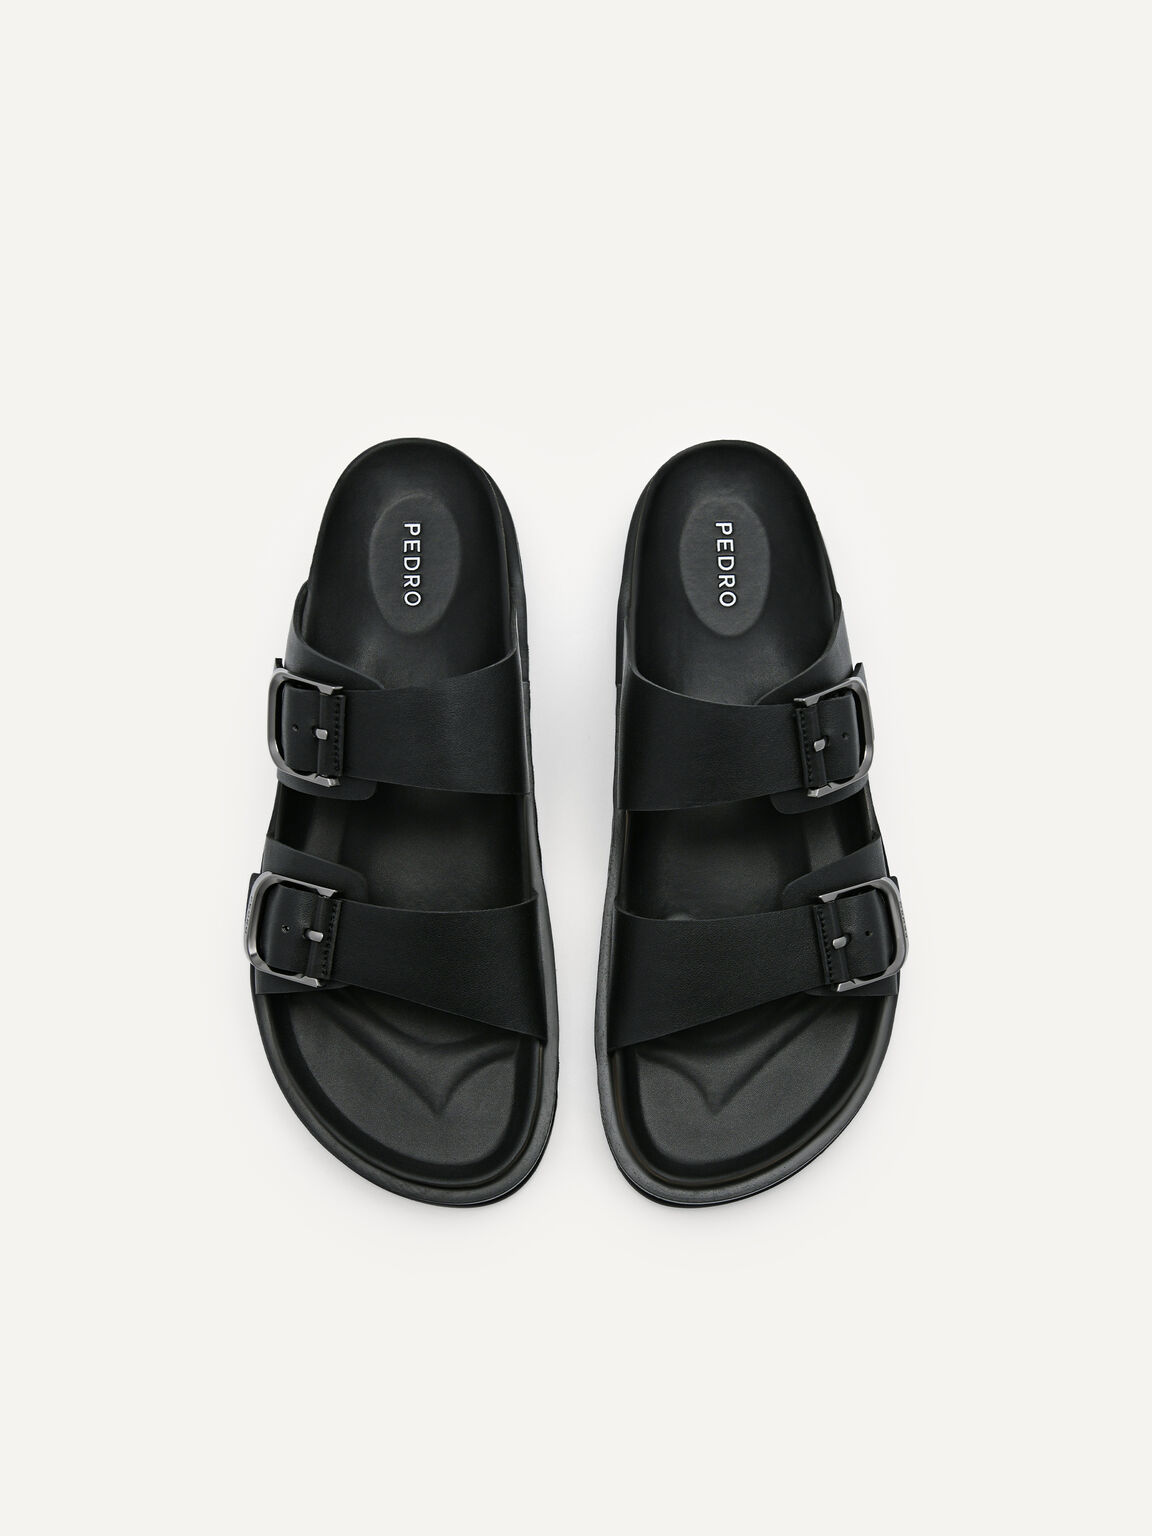 Men's Helix Slide Sandals, Black, hi-res